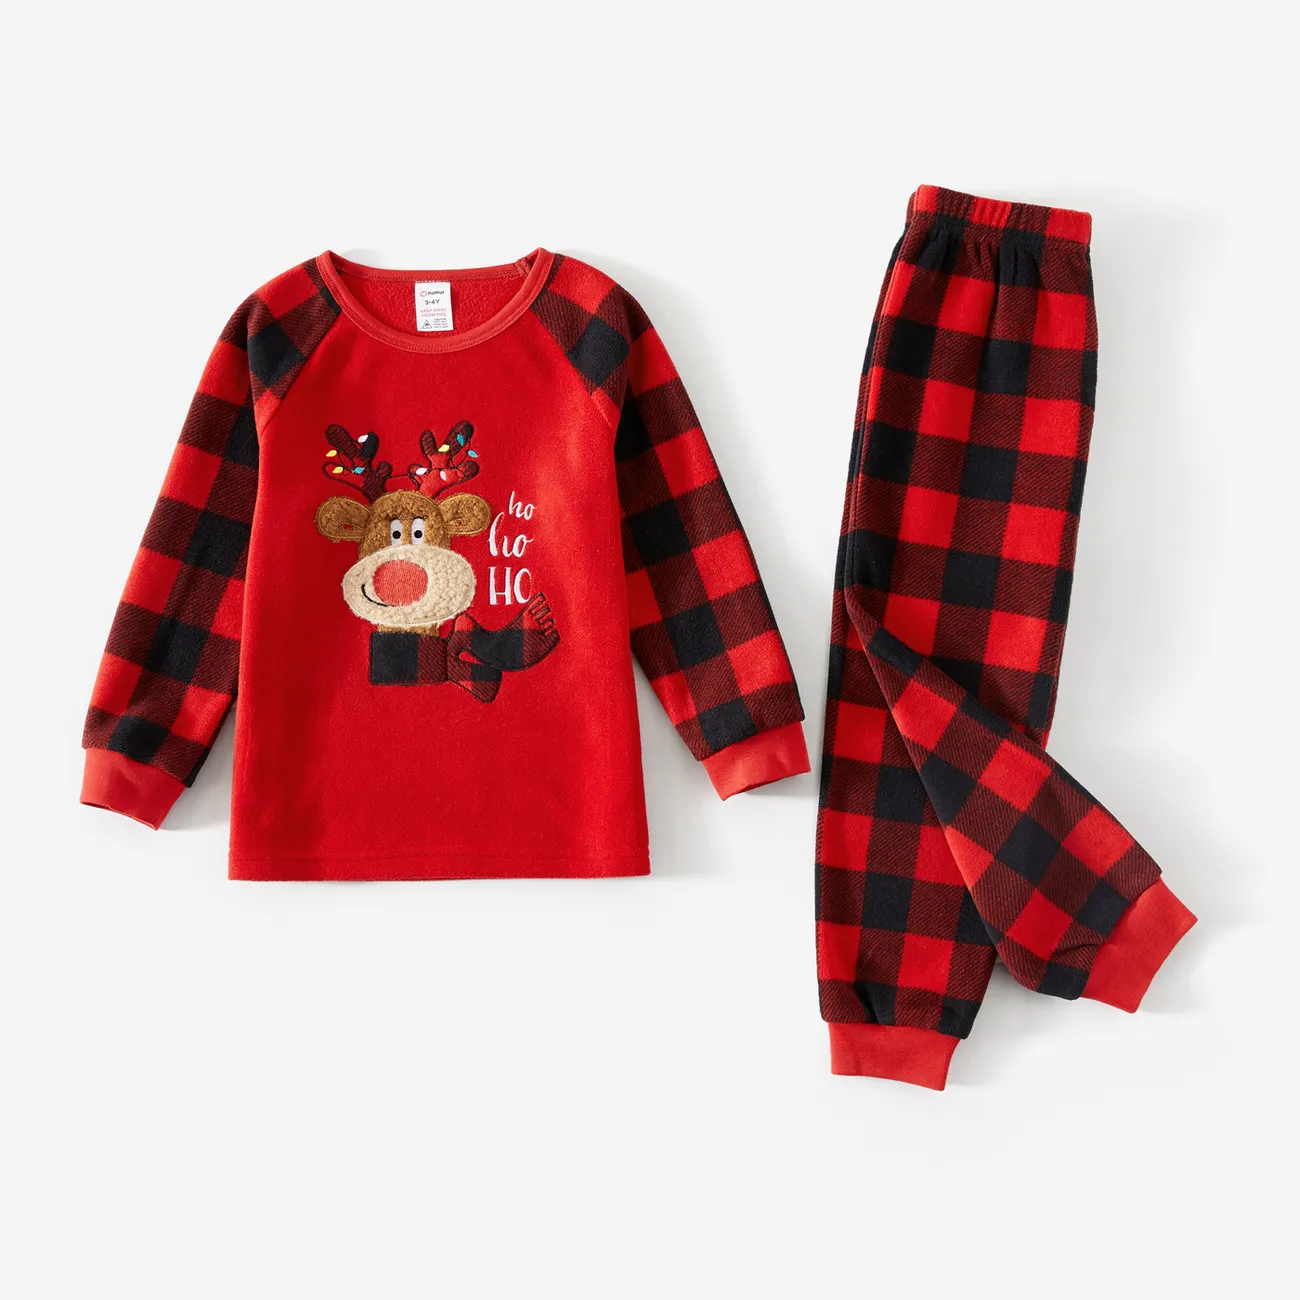 Weihnachten Familien-Looks Langärmelig Familien-Outfits Pyjamas (Flame Resistant) rot schwarz big image 1